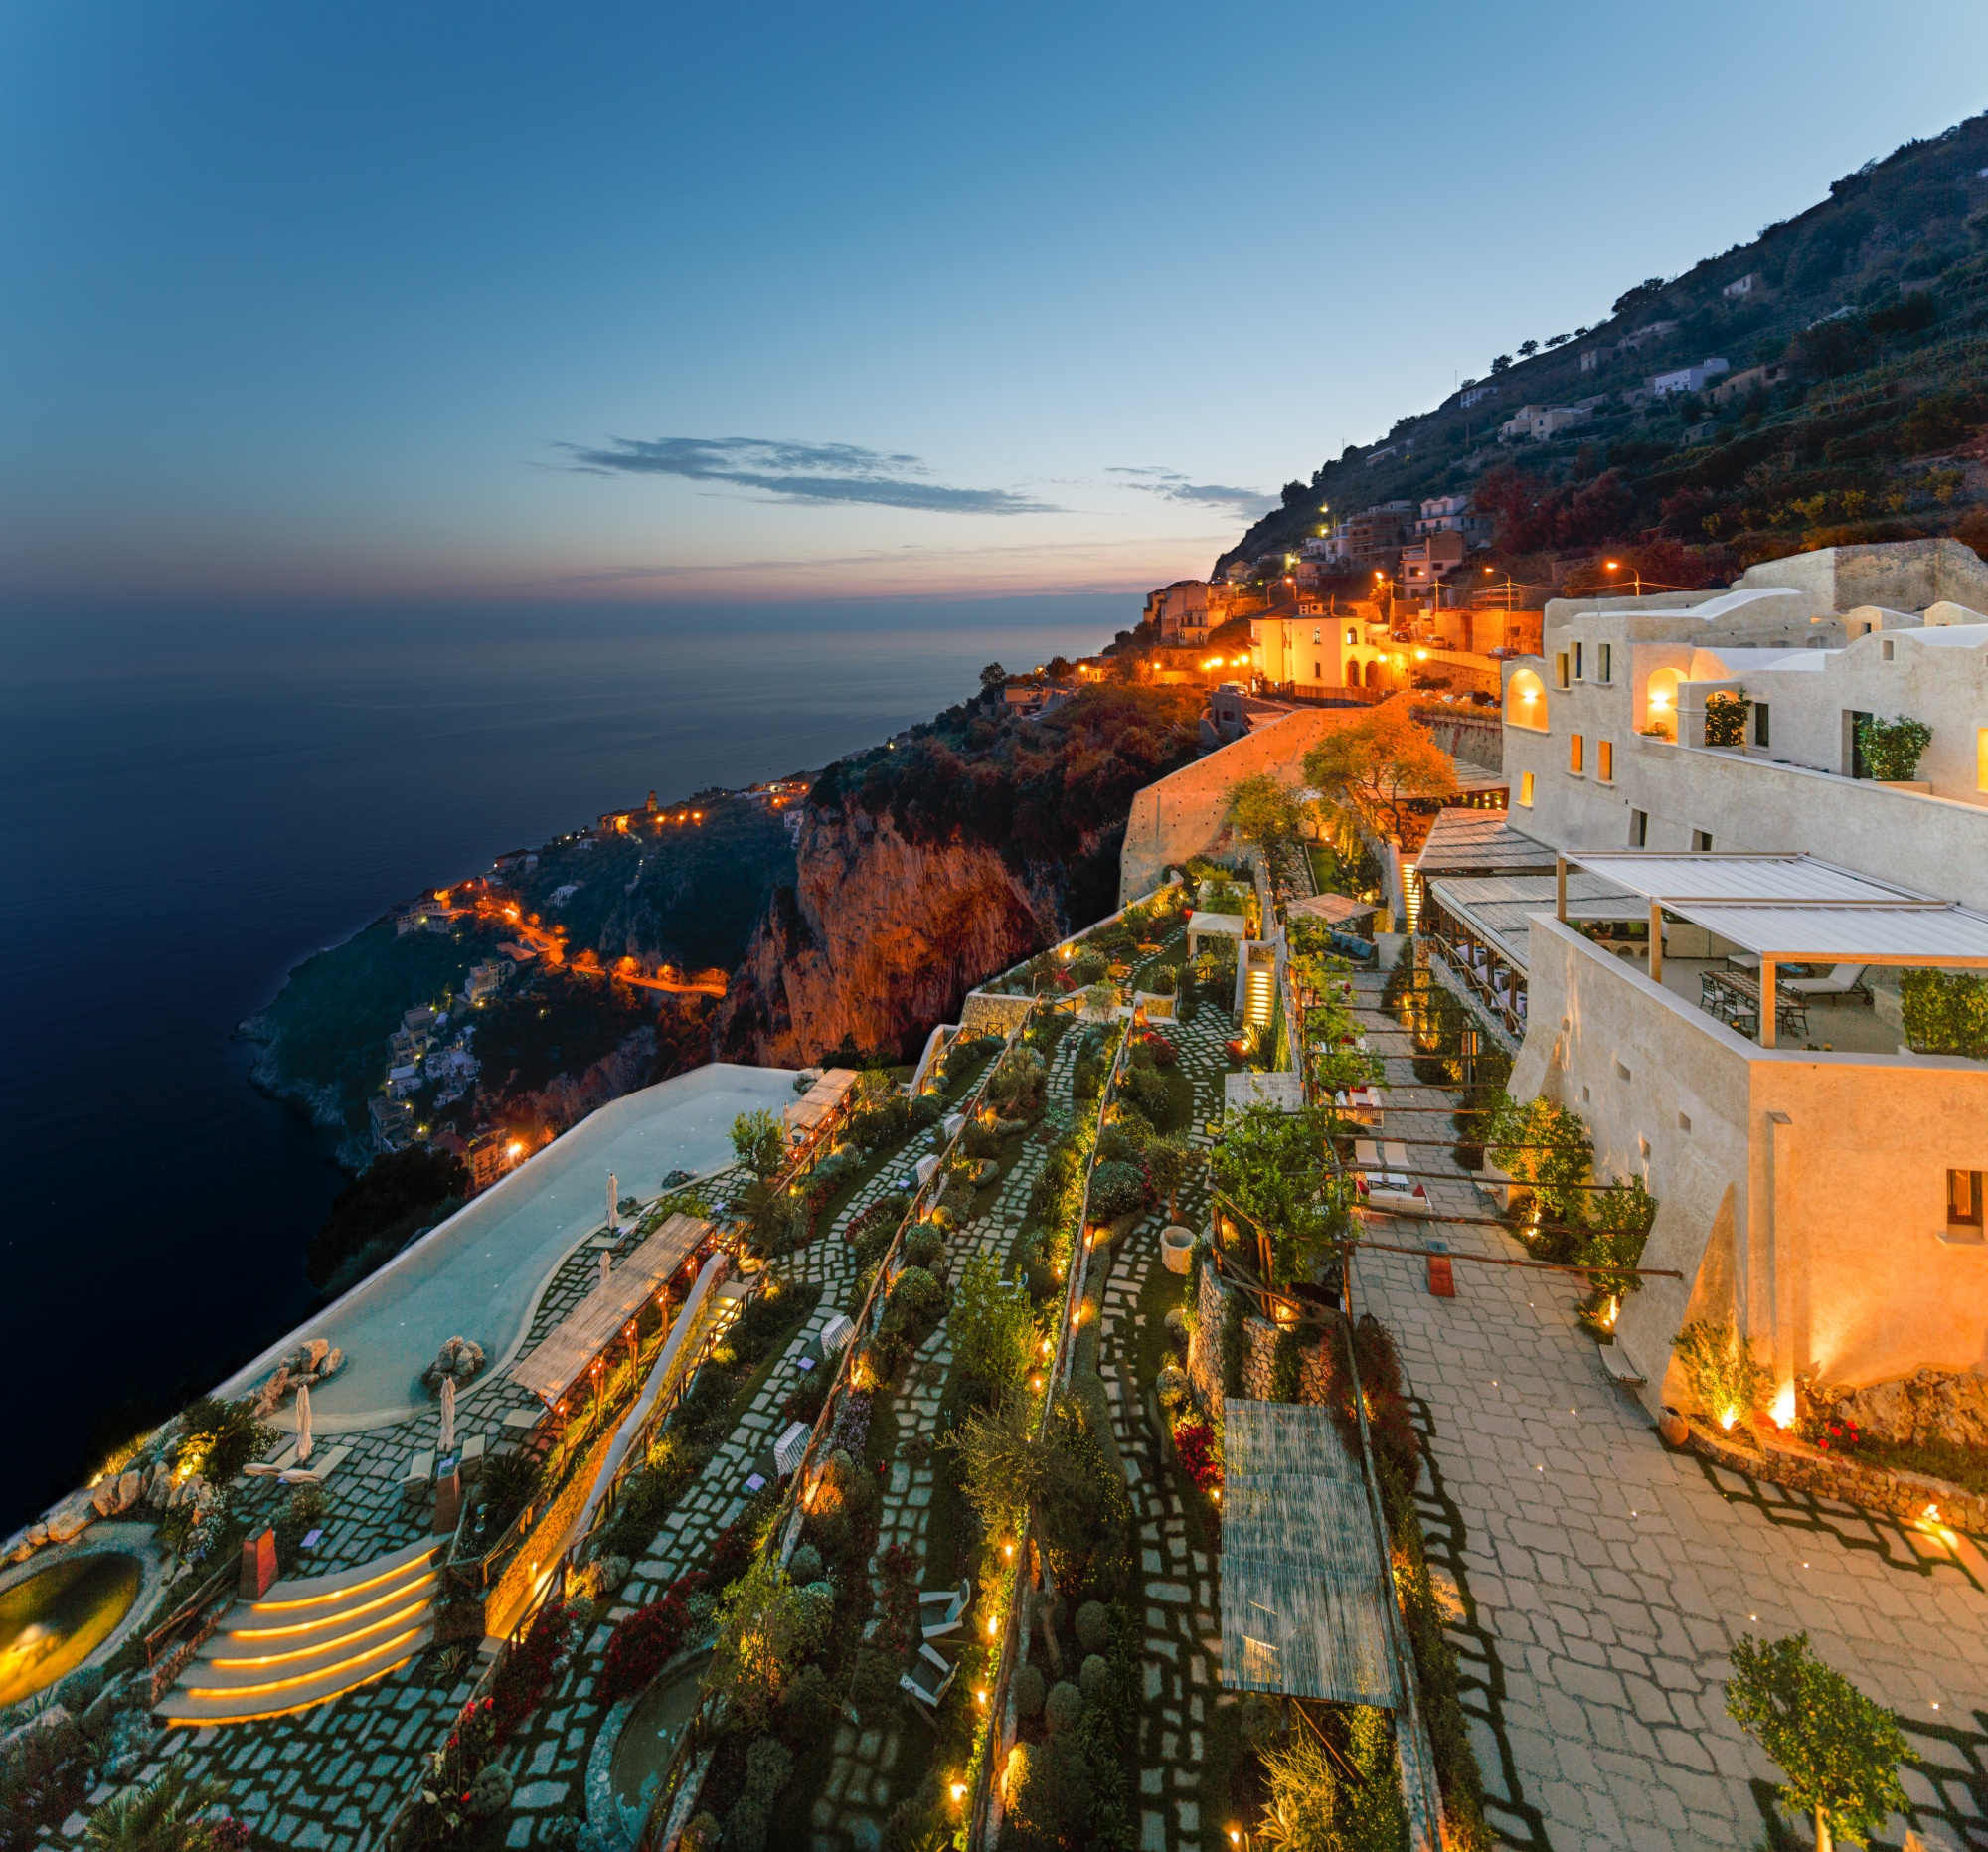 The Monastero Santa Rosa Hotel & Spa - Striking Views of the Amalfi Coast